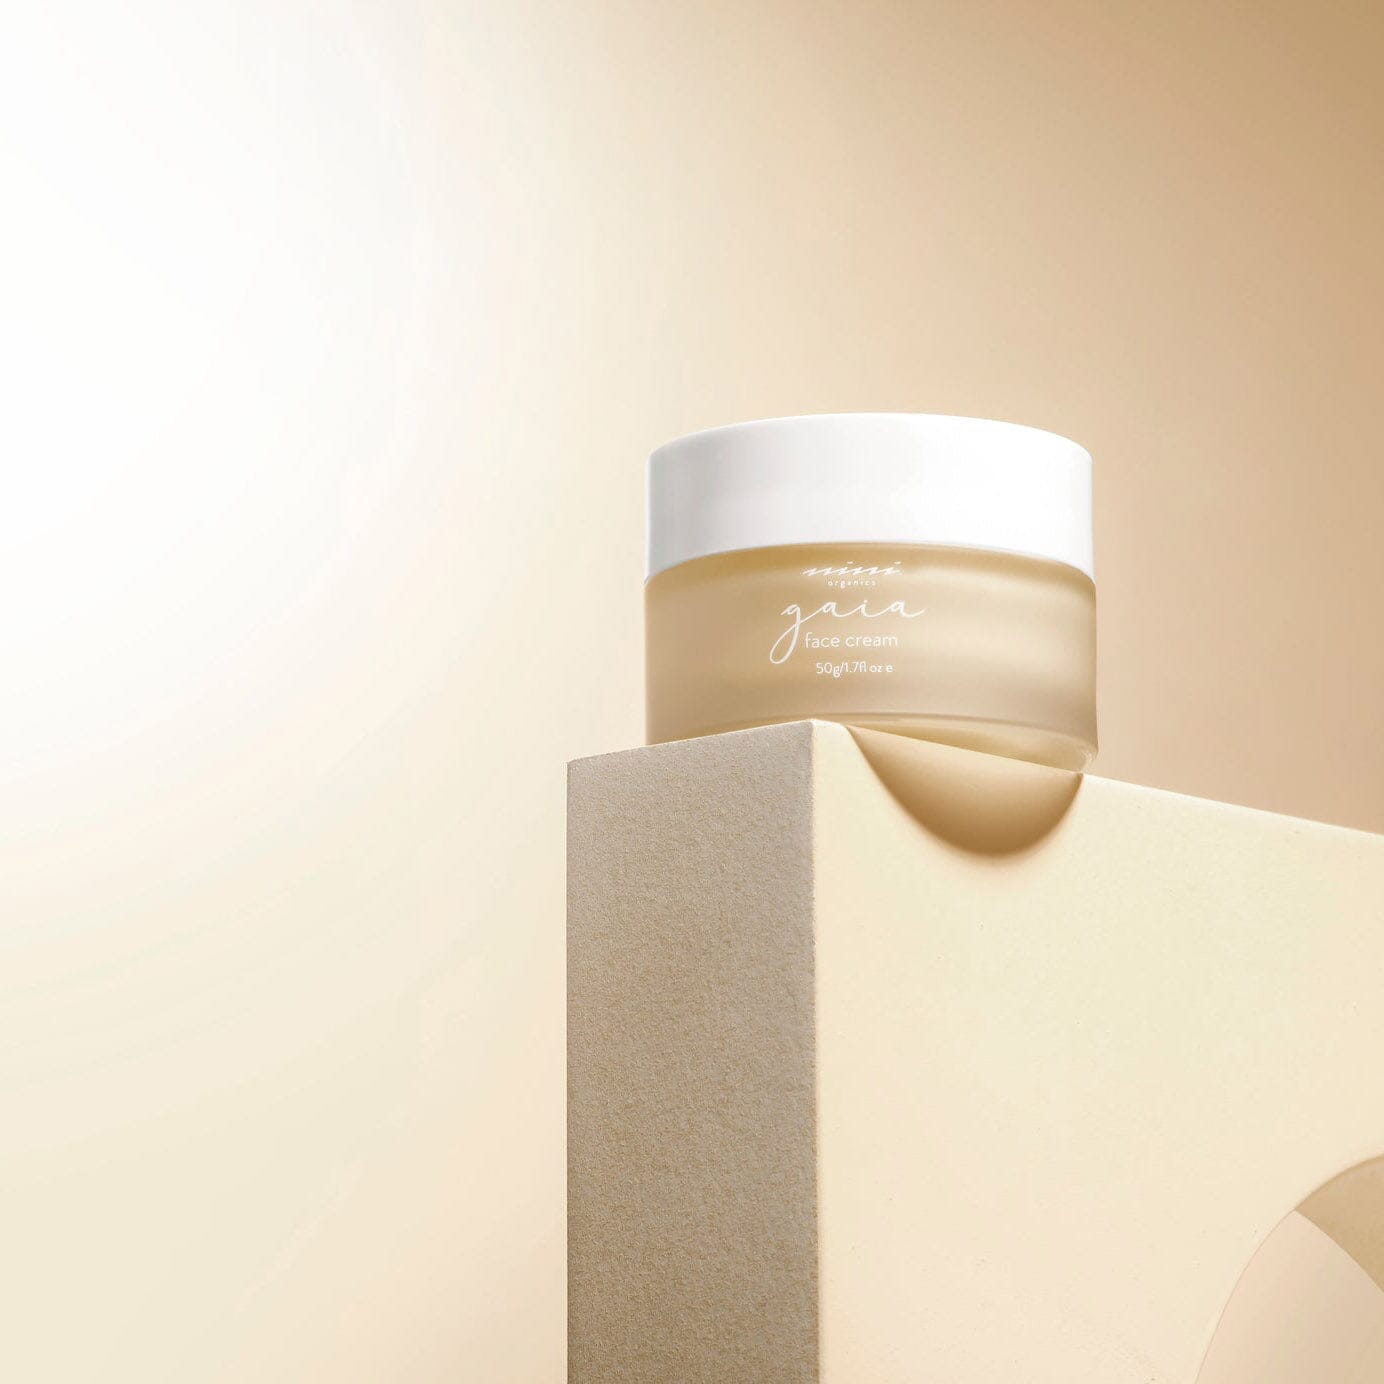 Gaia Firming & Brightening Face Cream Tagespflege NINI Organics - Genuine Selection